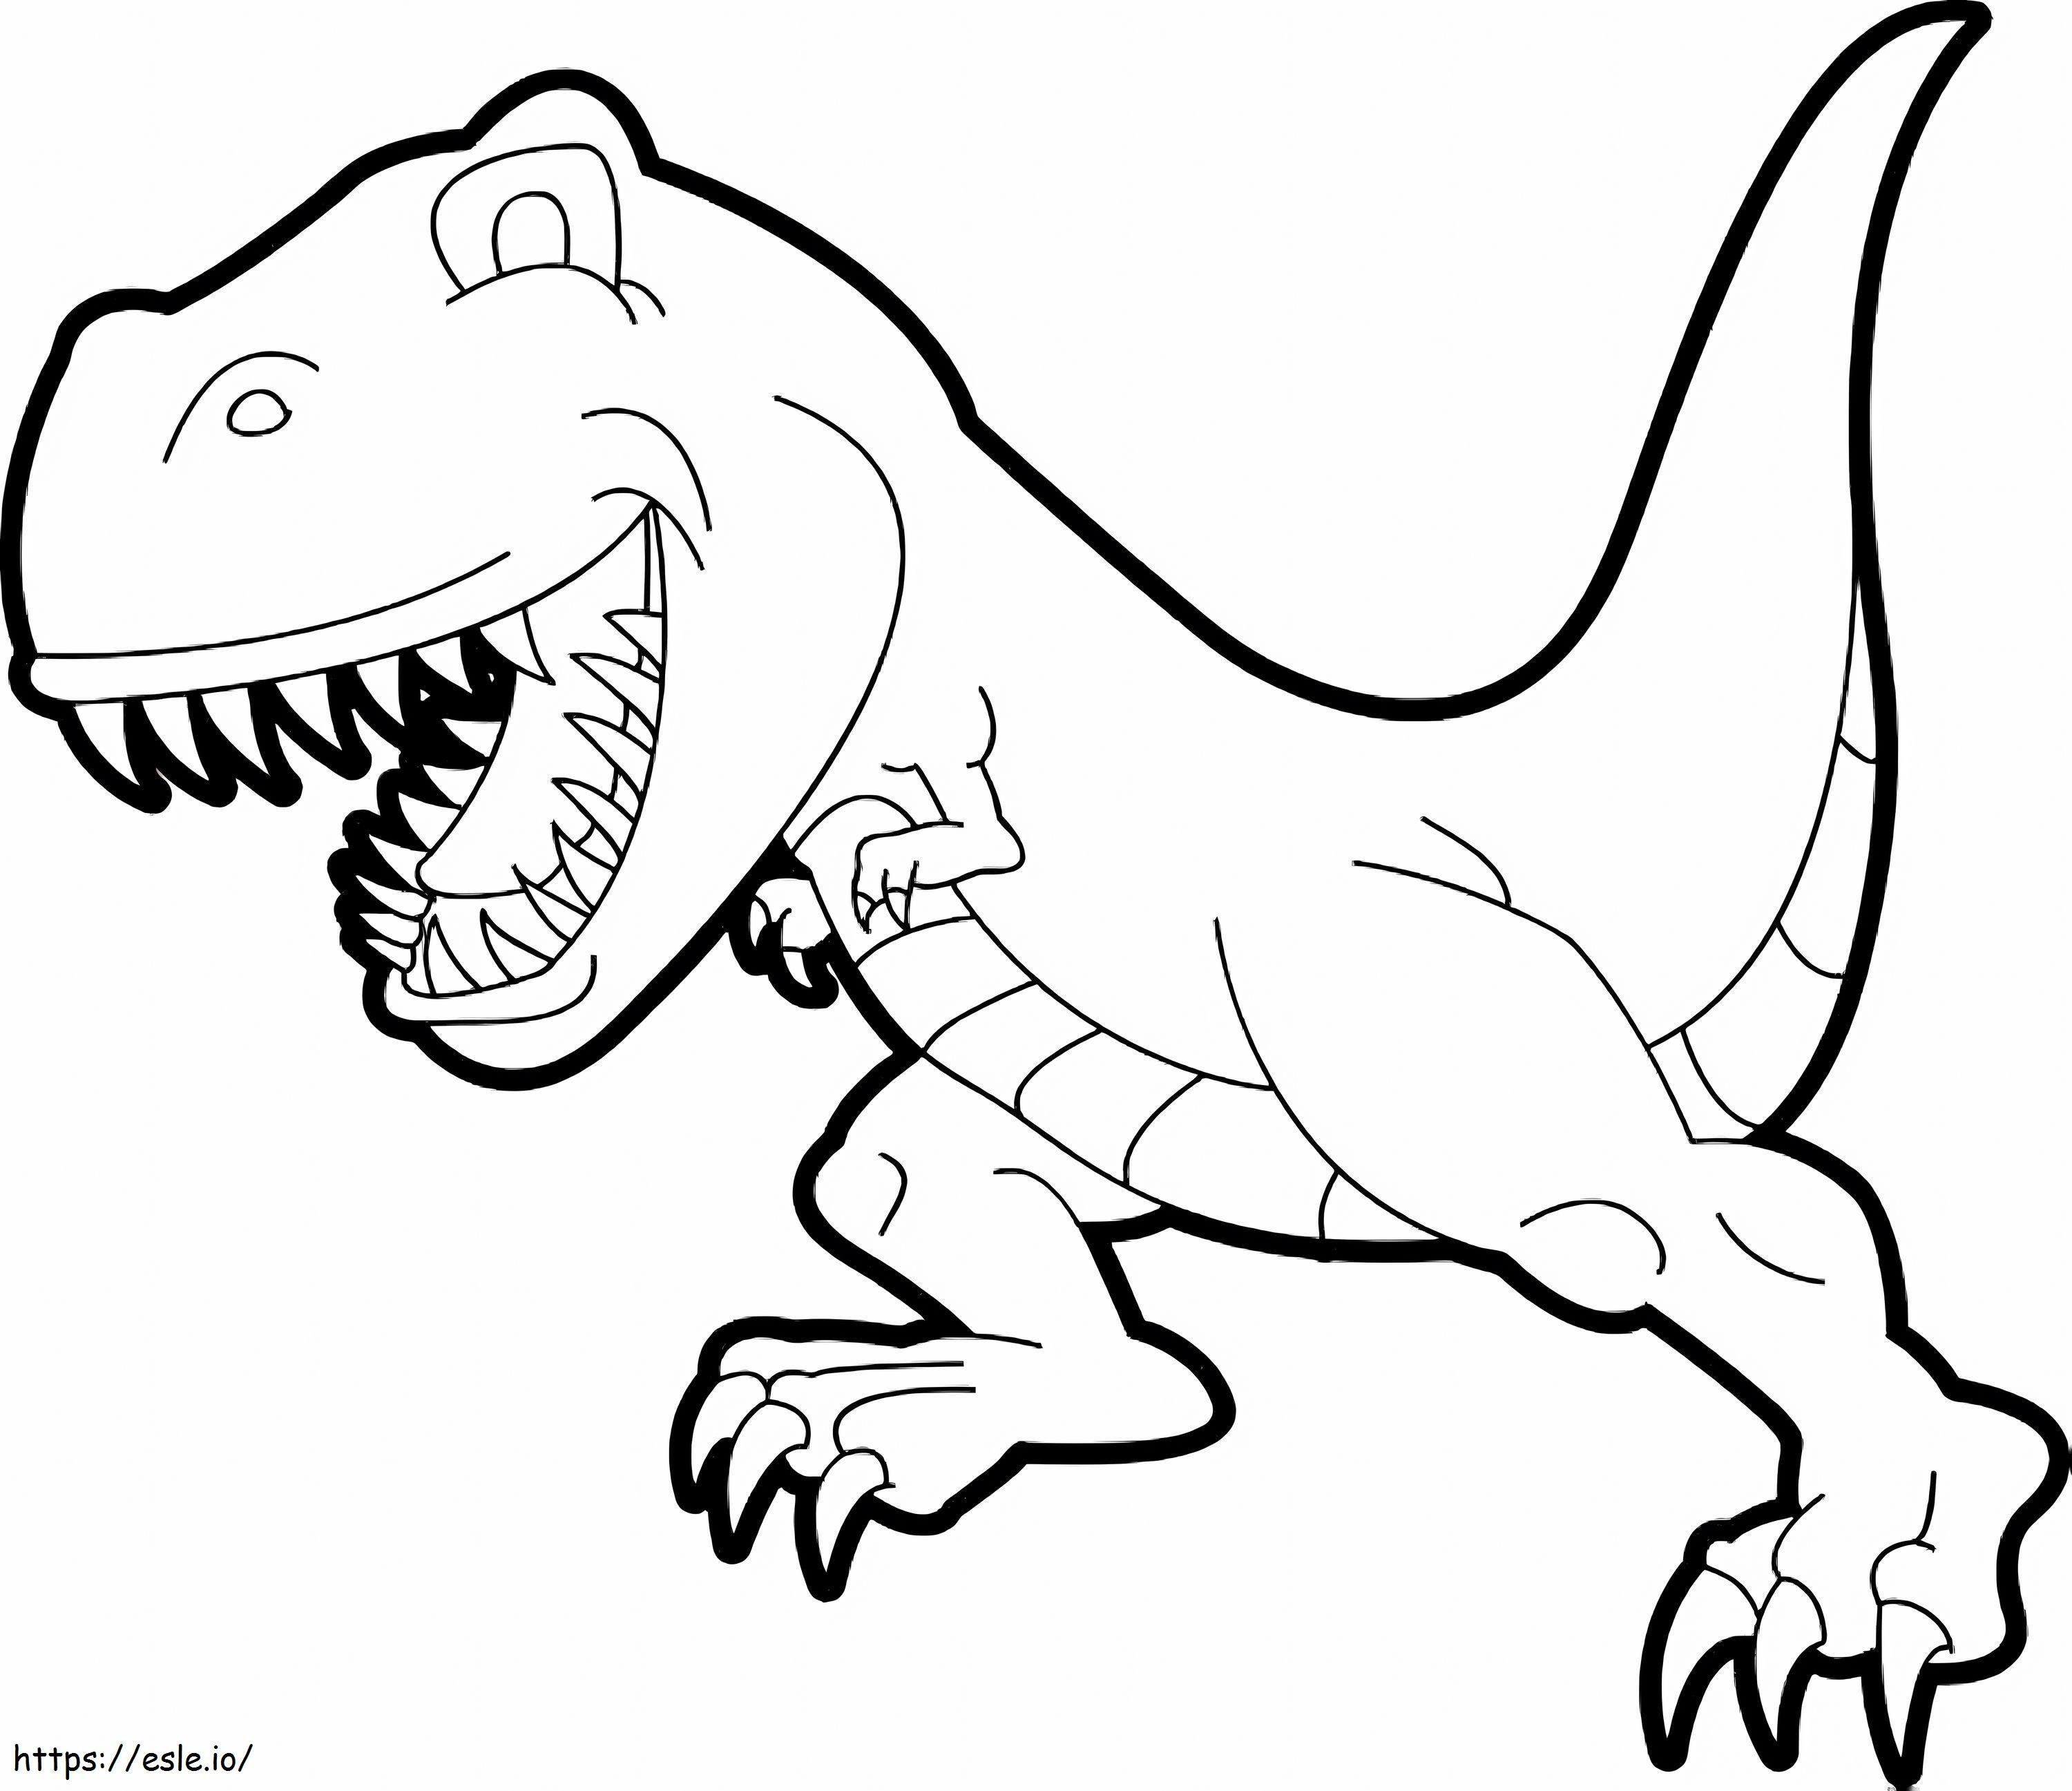 1539674613 T Rex Drawing Inspirationa Dinosaur New Simple Dinosaur Best Of T Rex Drawing ausmalbilder